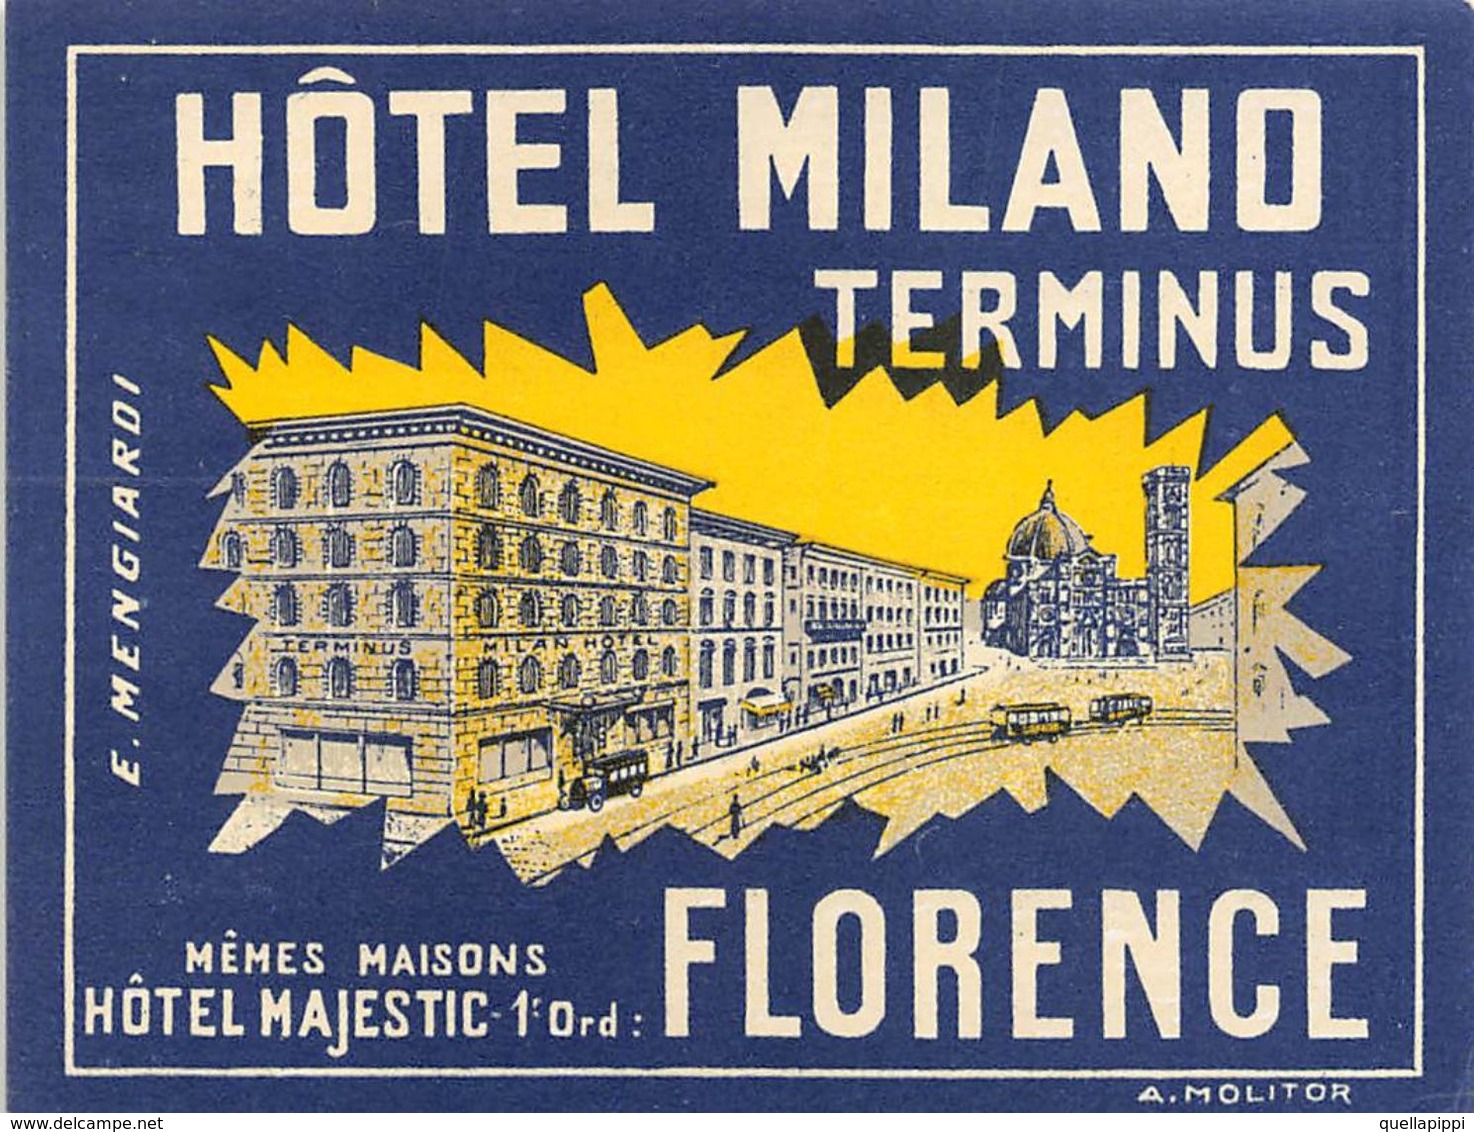 D7548 "ITALIA - LOMBARDIA - FIRENZE - HOTEL MILANO TERMINUS" TRAM WAY. ETIC. ORIG. LUGGAGE LABEL - Adesivi Di Alberghi